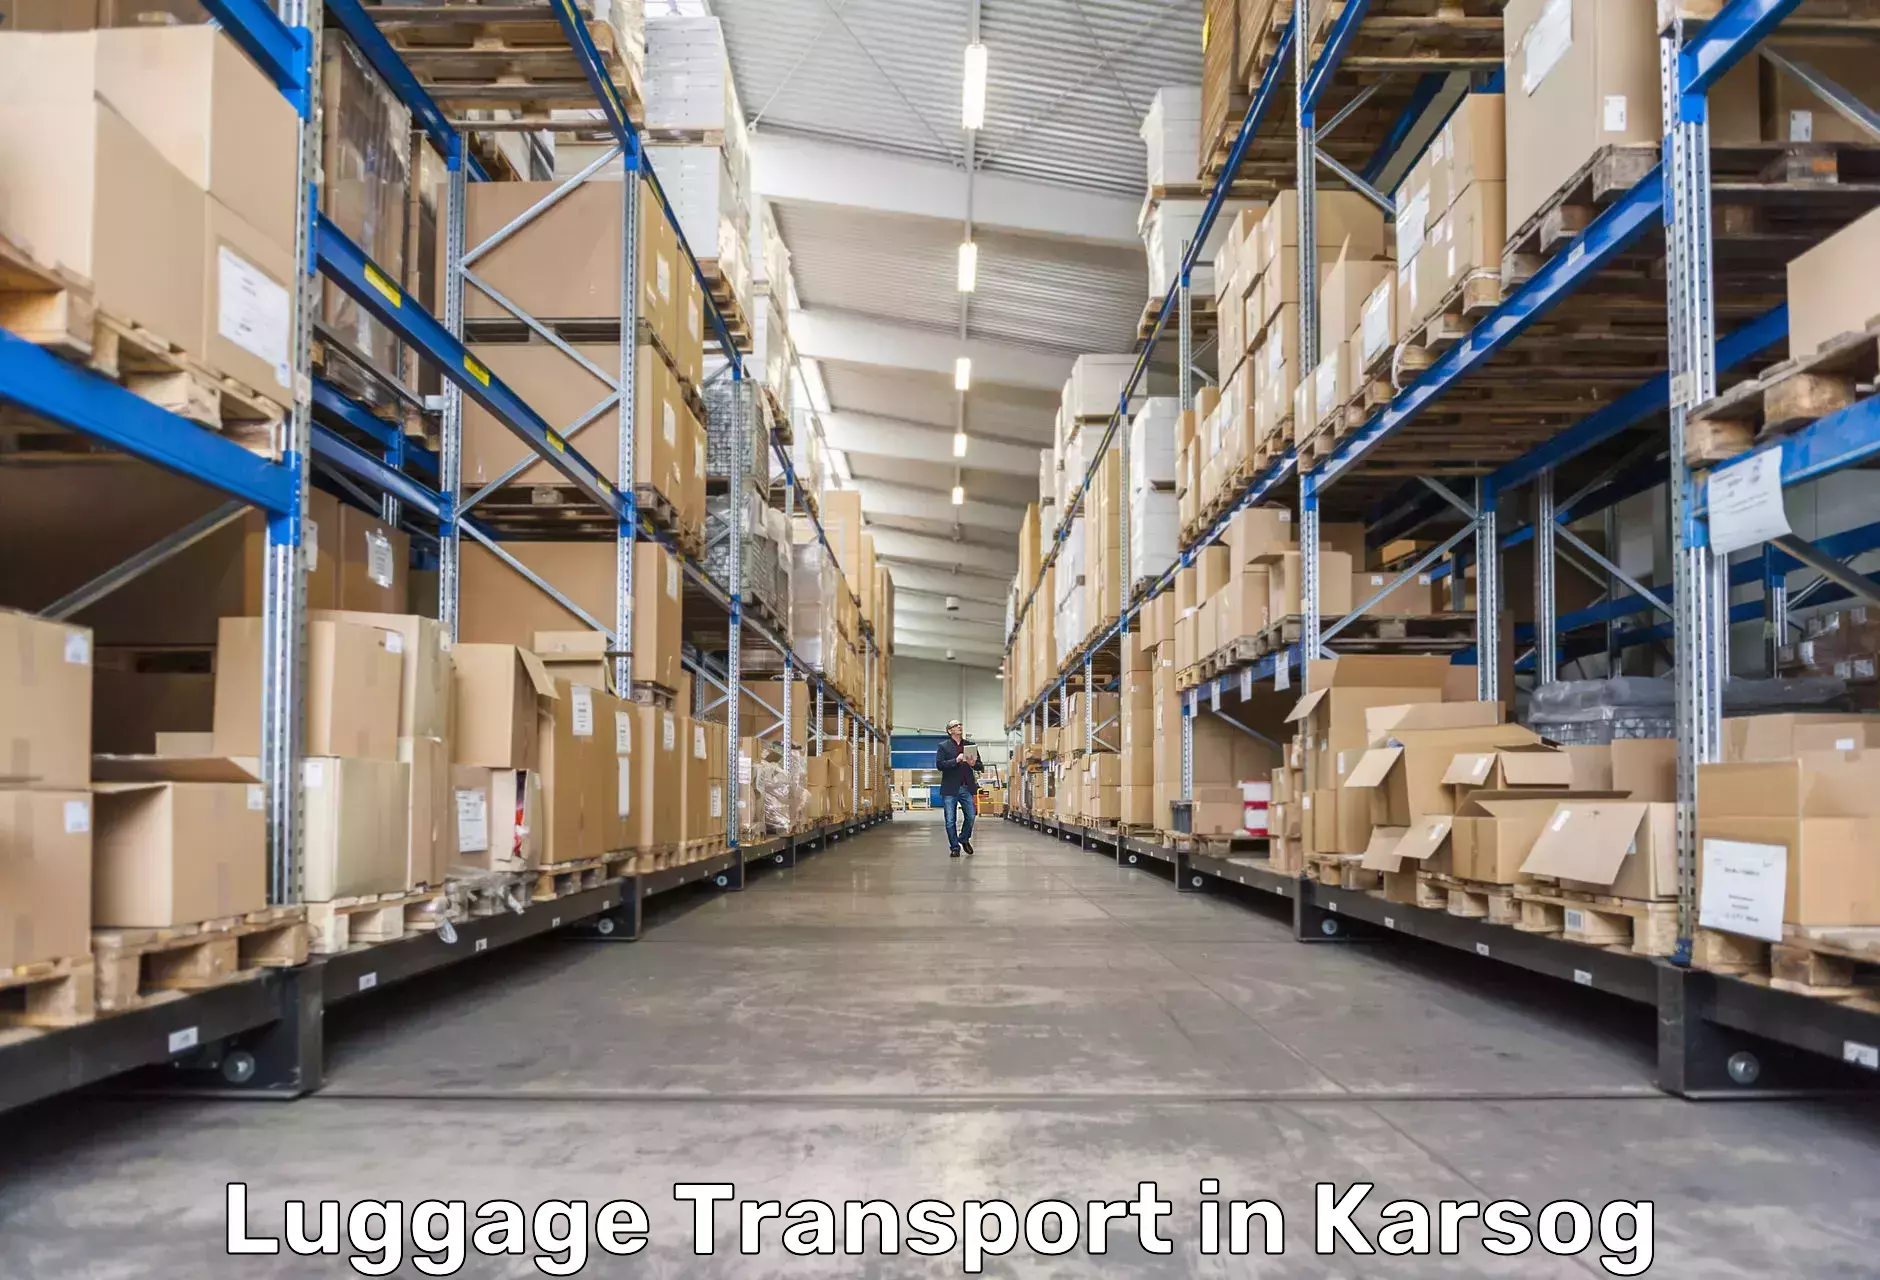 Luggage transport consultancy in Karsog